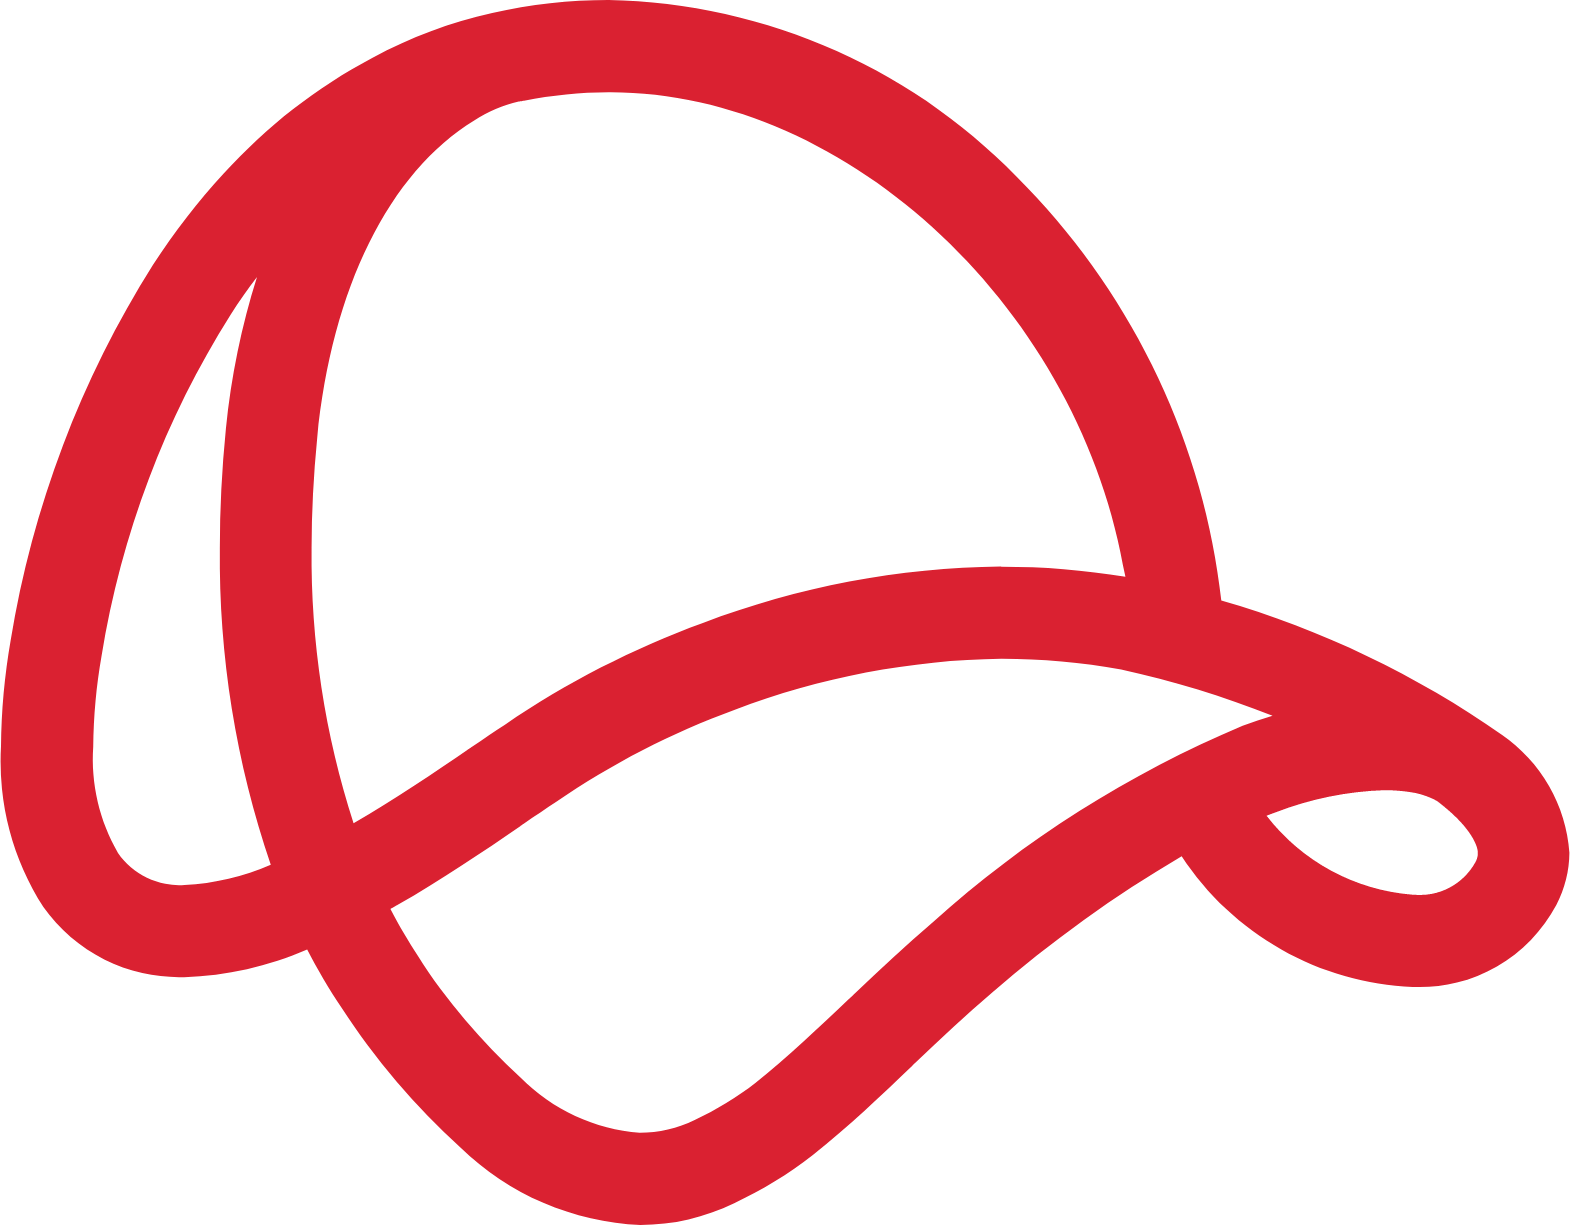 Mr Price Group logo (transparent PNG)